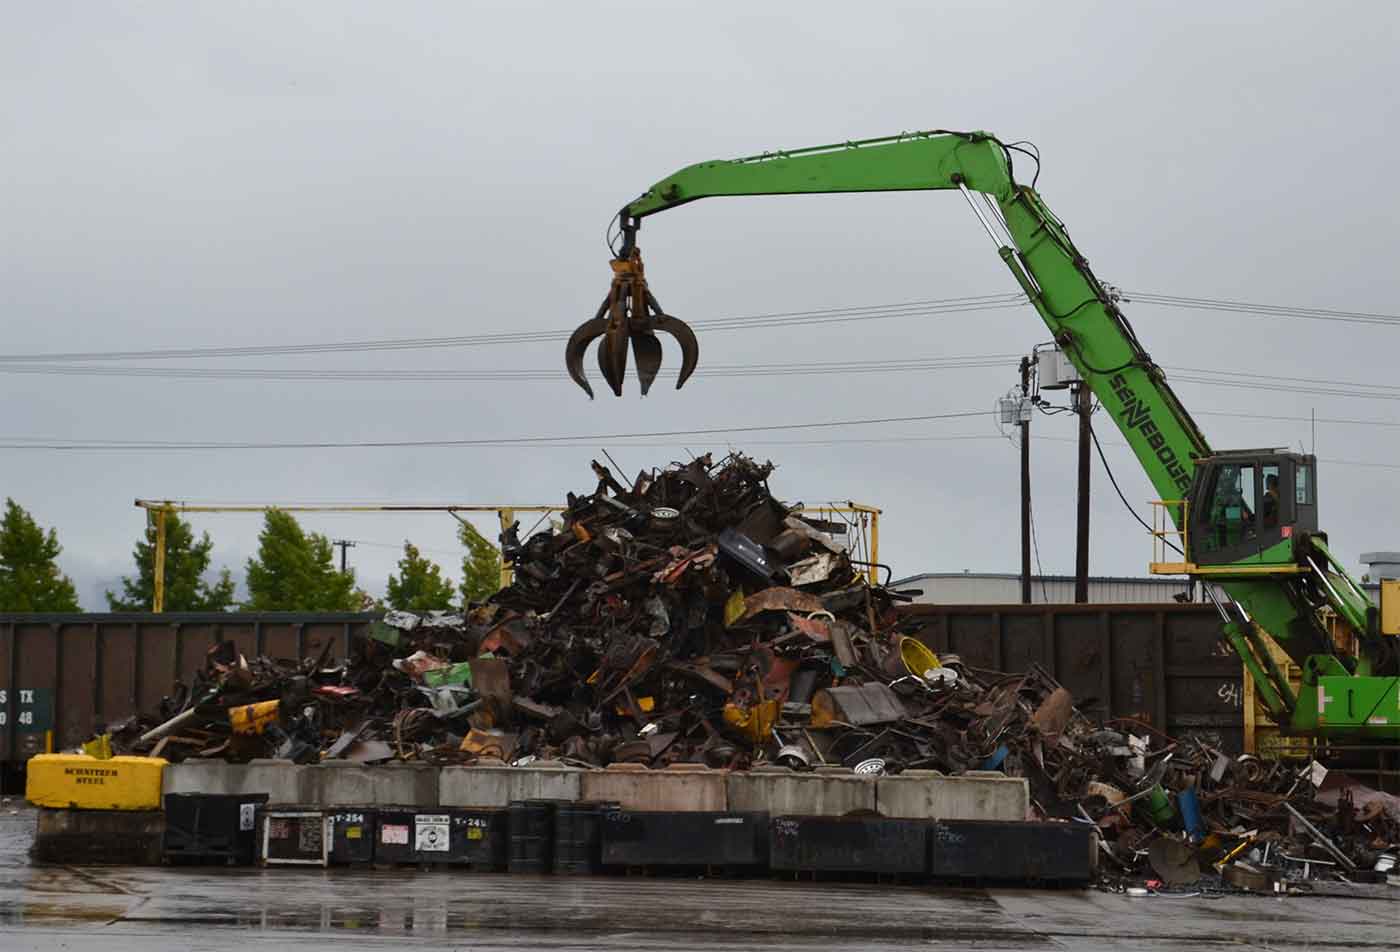 Scrap metal in Eugene, Oregon